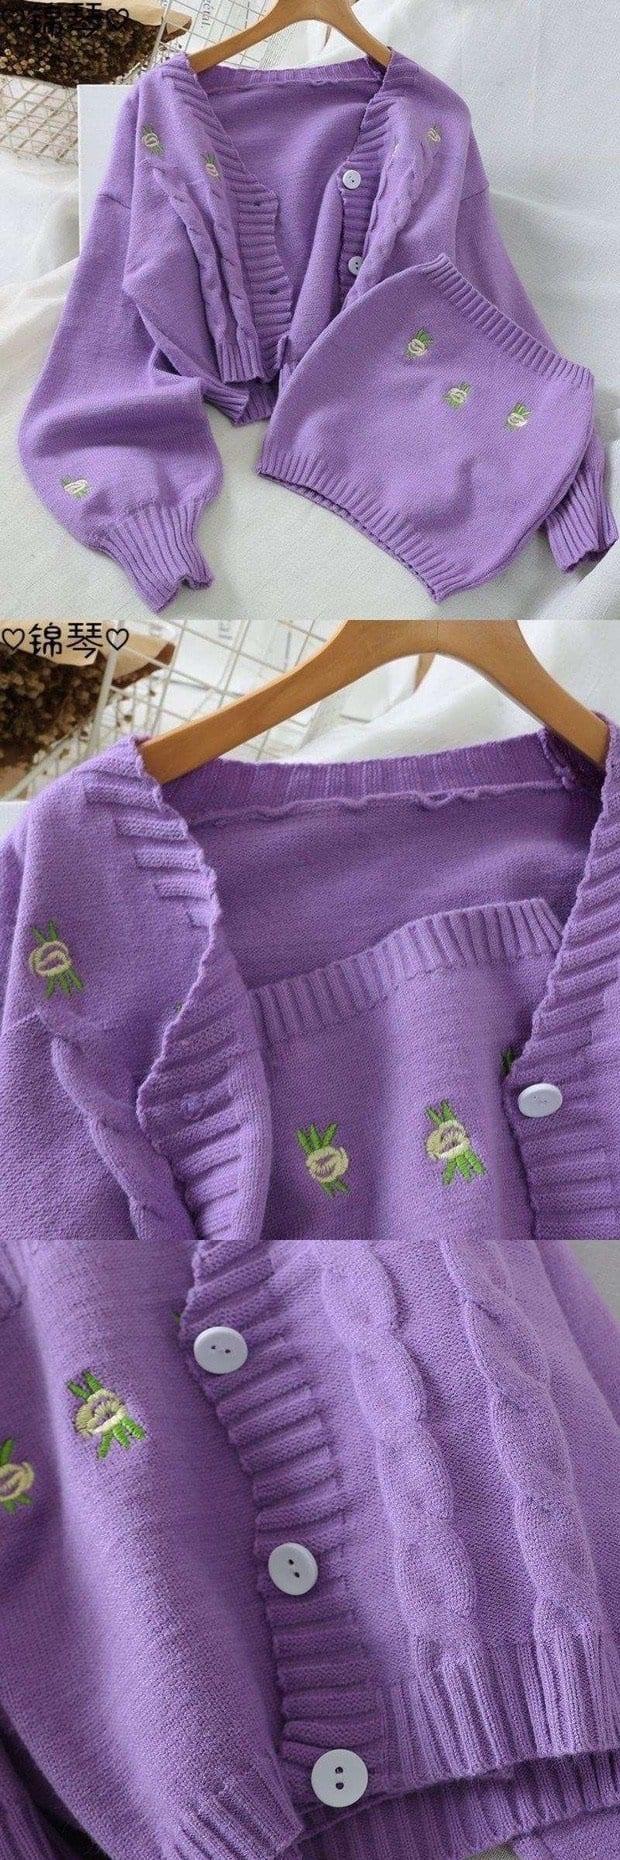 Buy Cortel Sweater Sets for Women Online in India